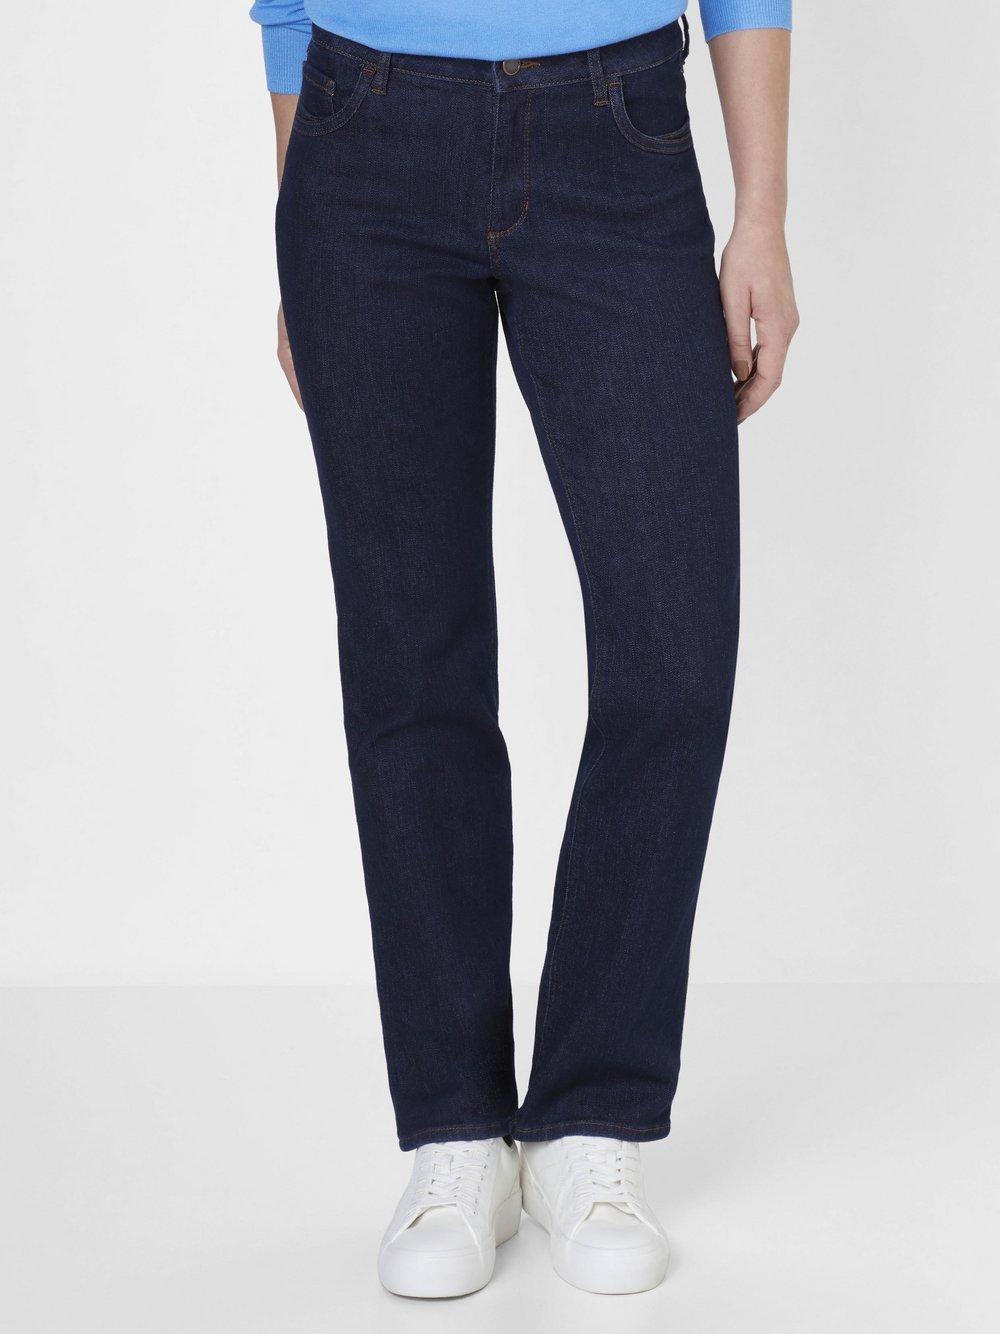 Paddock`s 5-Pocket Jeans Damen Baumwolle, rinsed von Paddock's